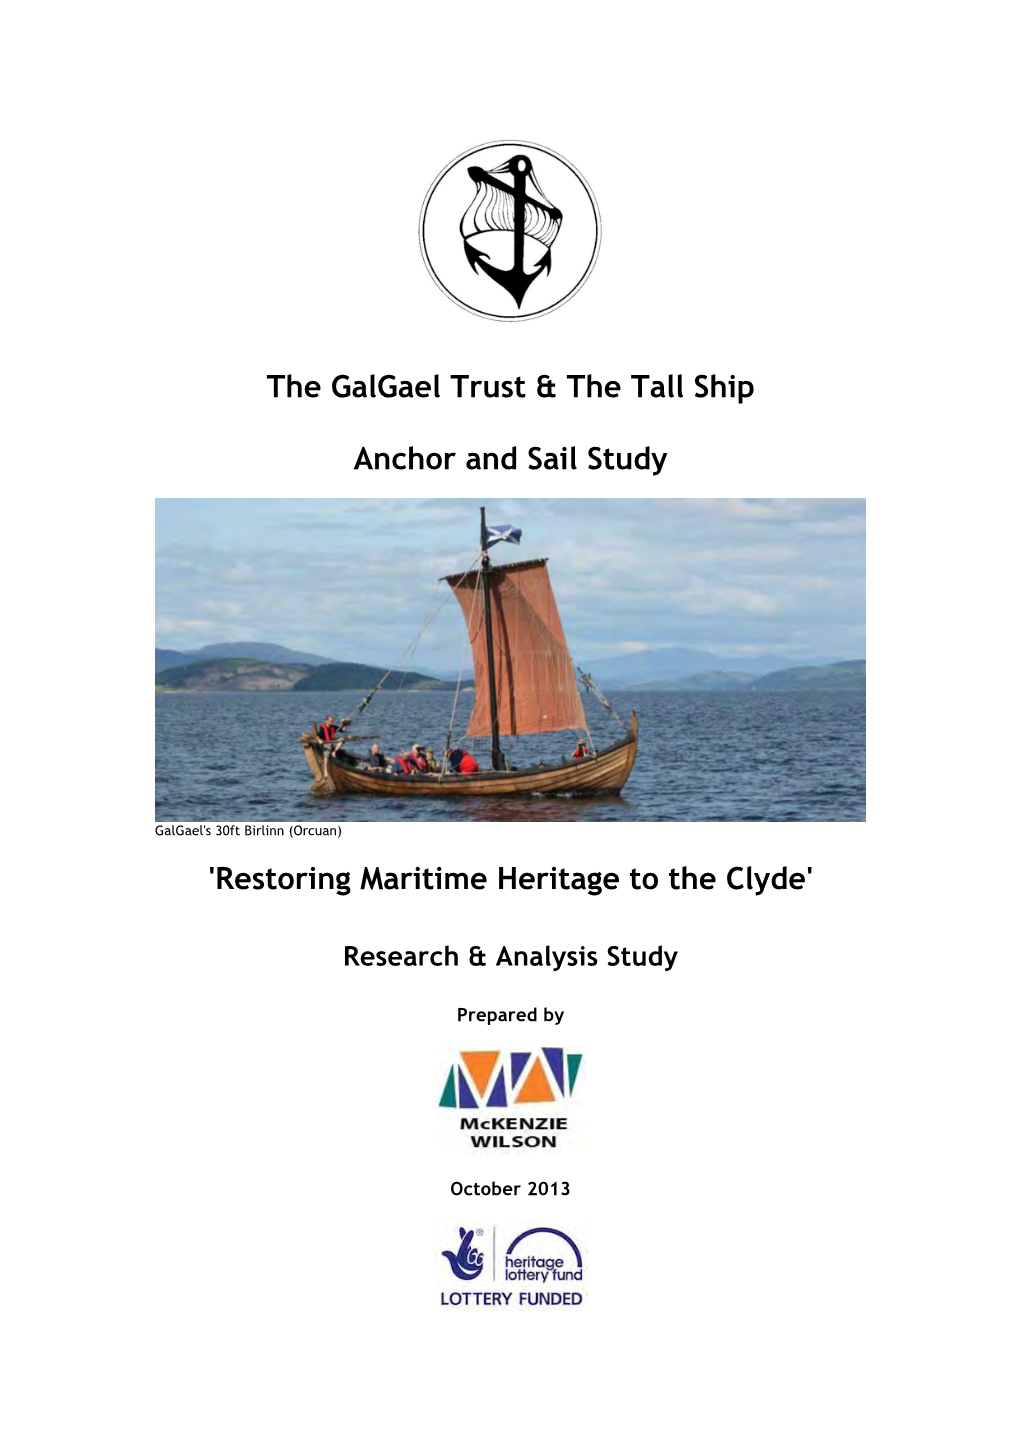 The Galgael Trust & the Tall Ship Anchor